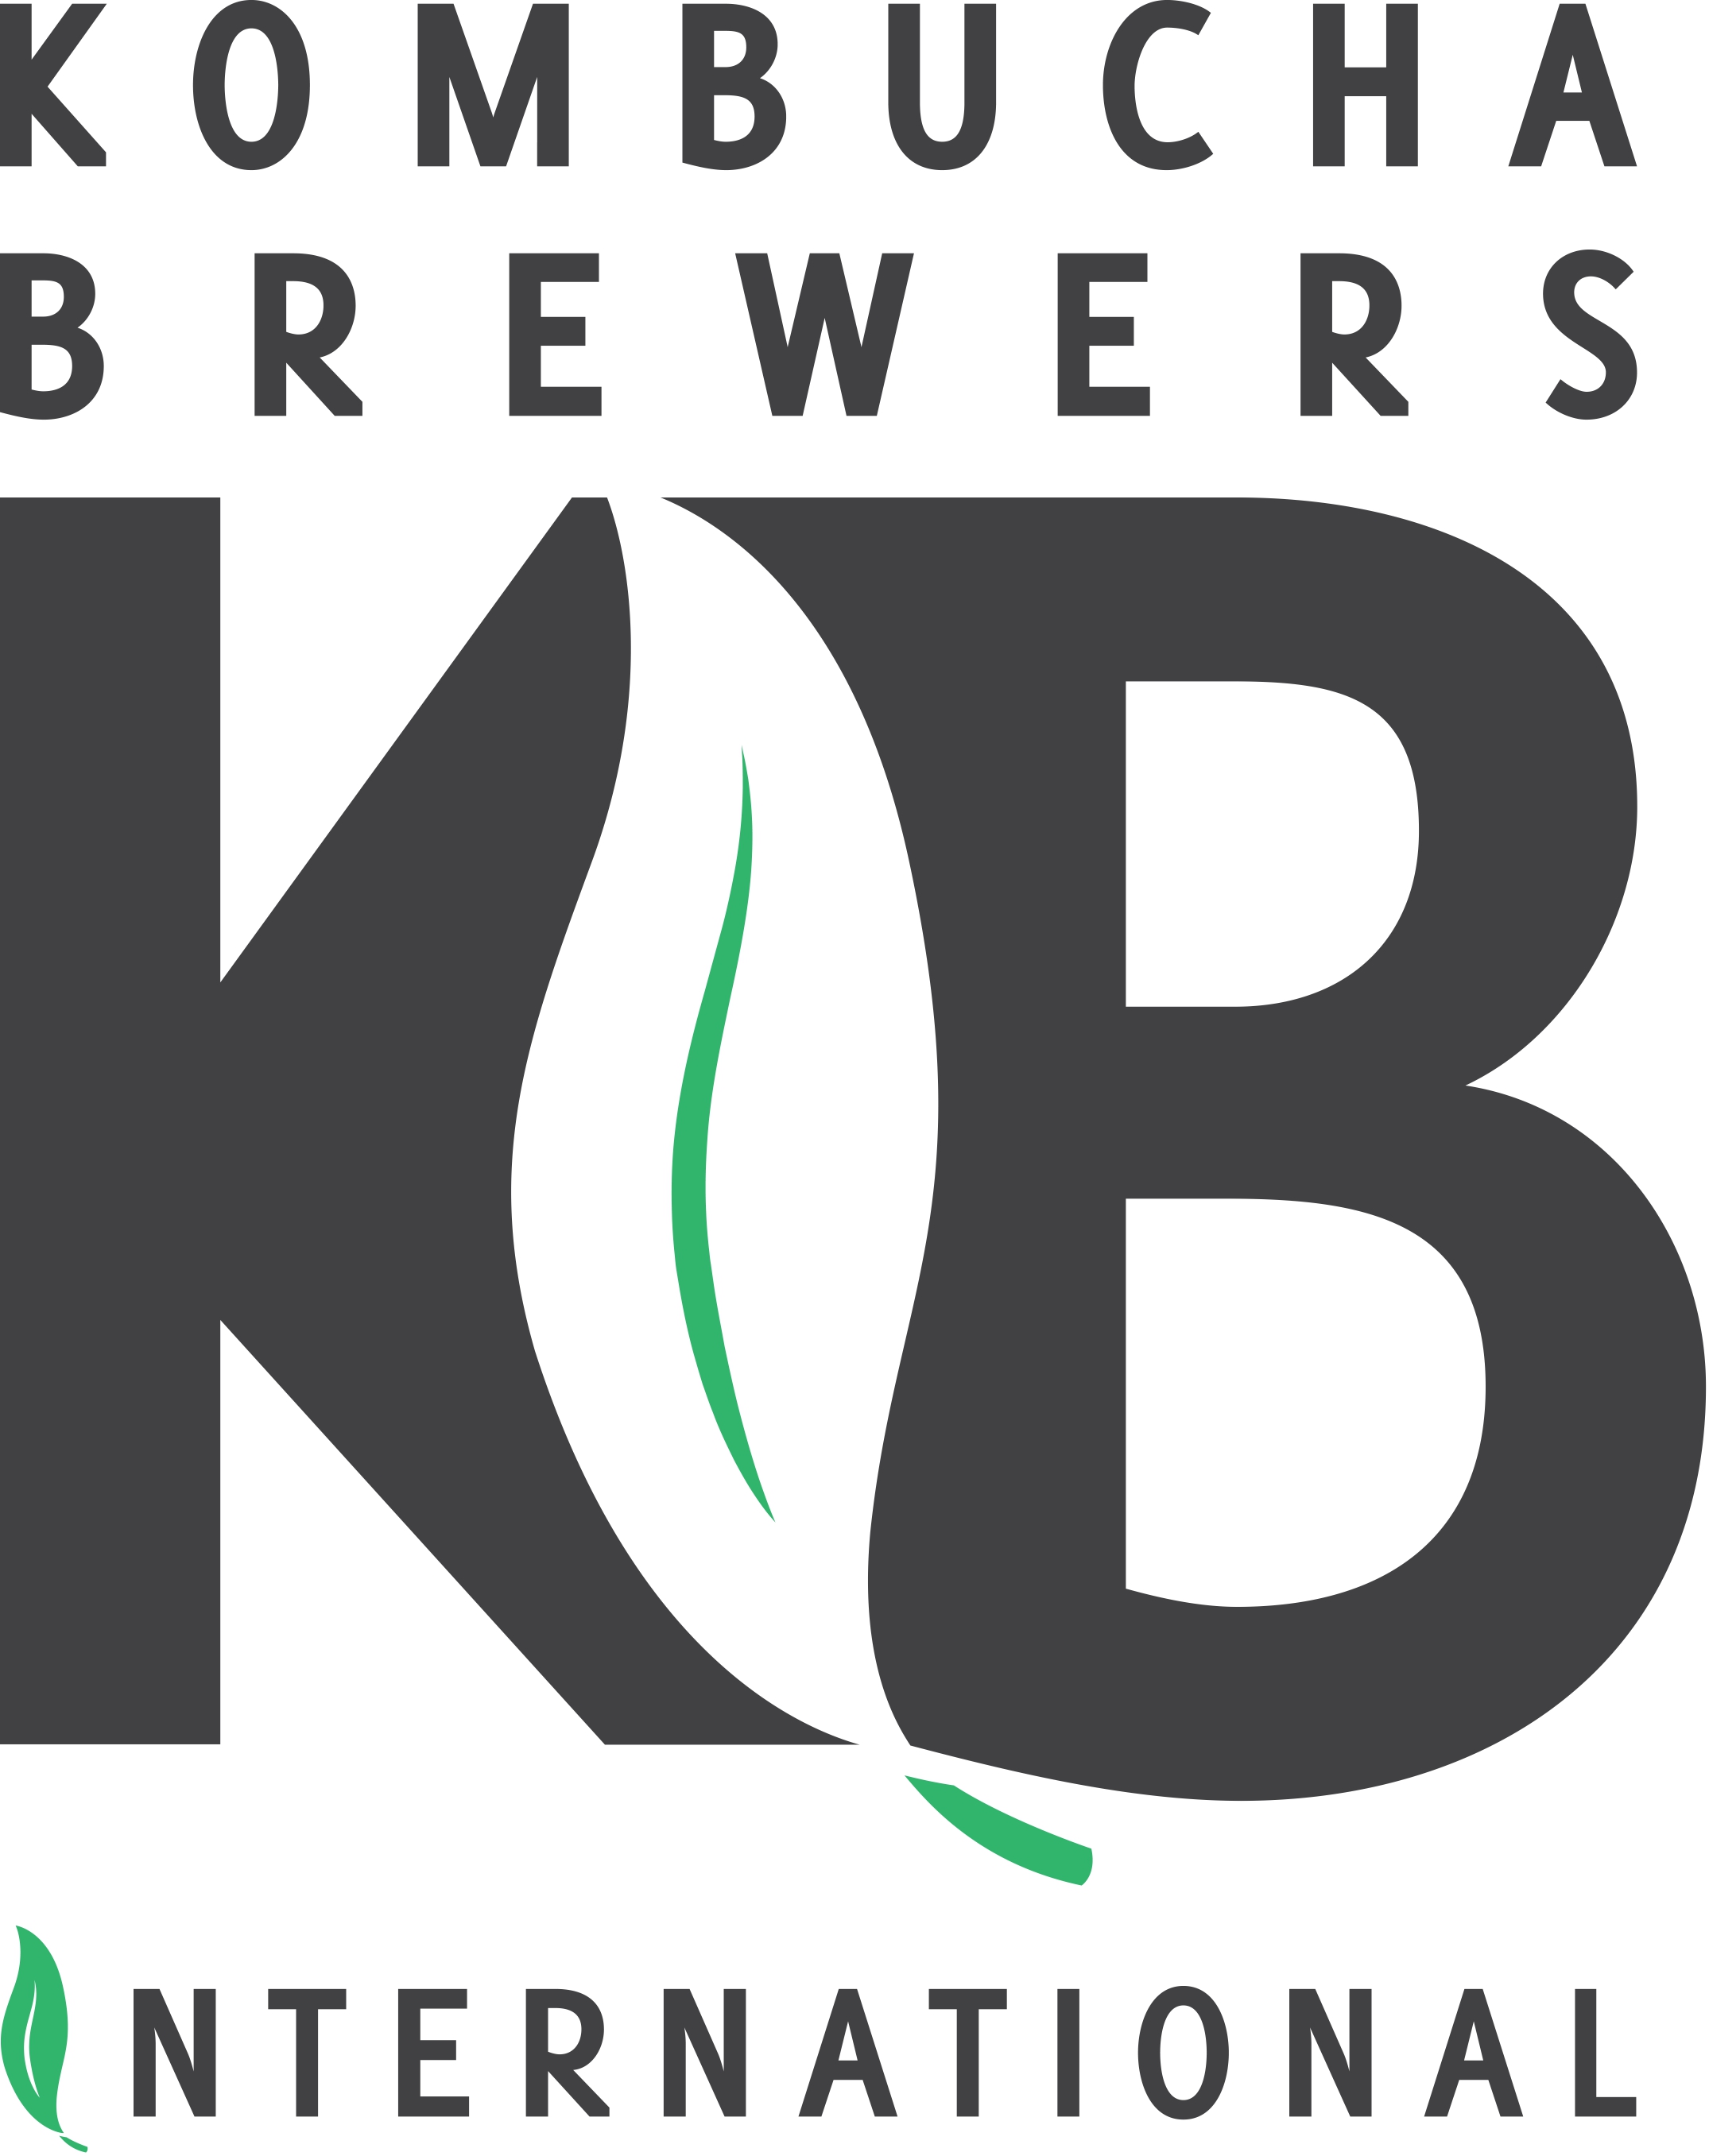 kombucha brewers international